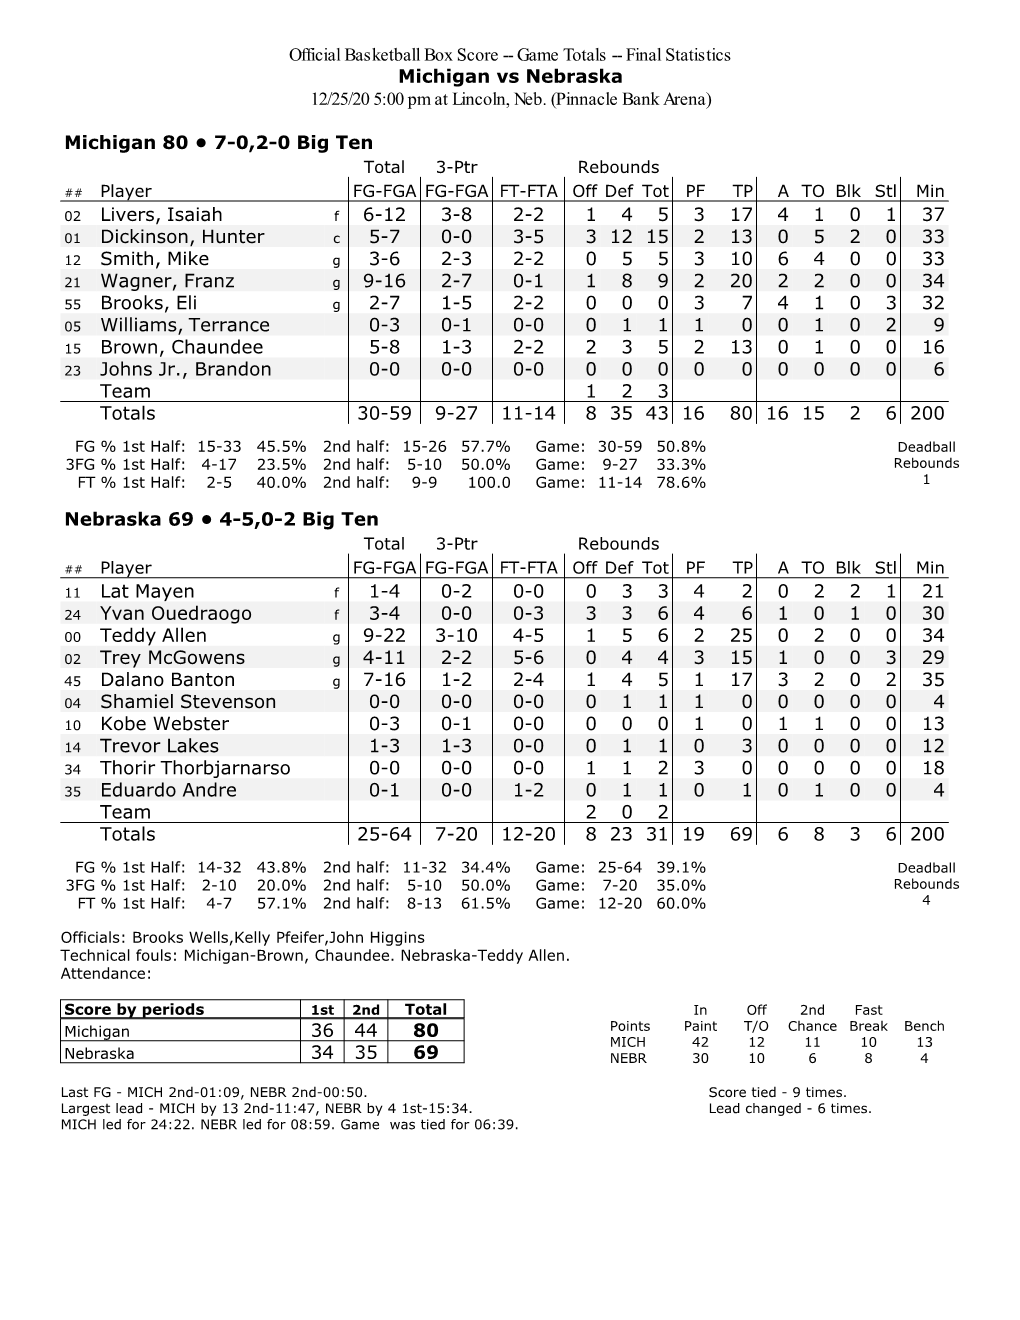 Official Basketball Box Score -- Game Totals -- Final Statistics Michigan Vs Nebraska 12/25/20 5:00 Pm at Lincoln, Neb